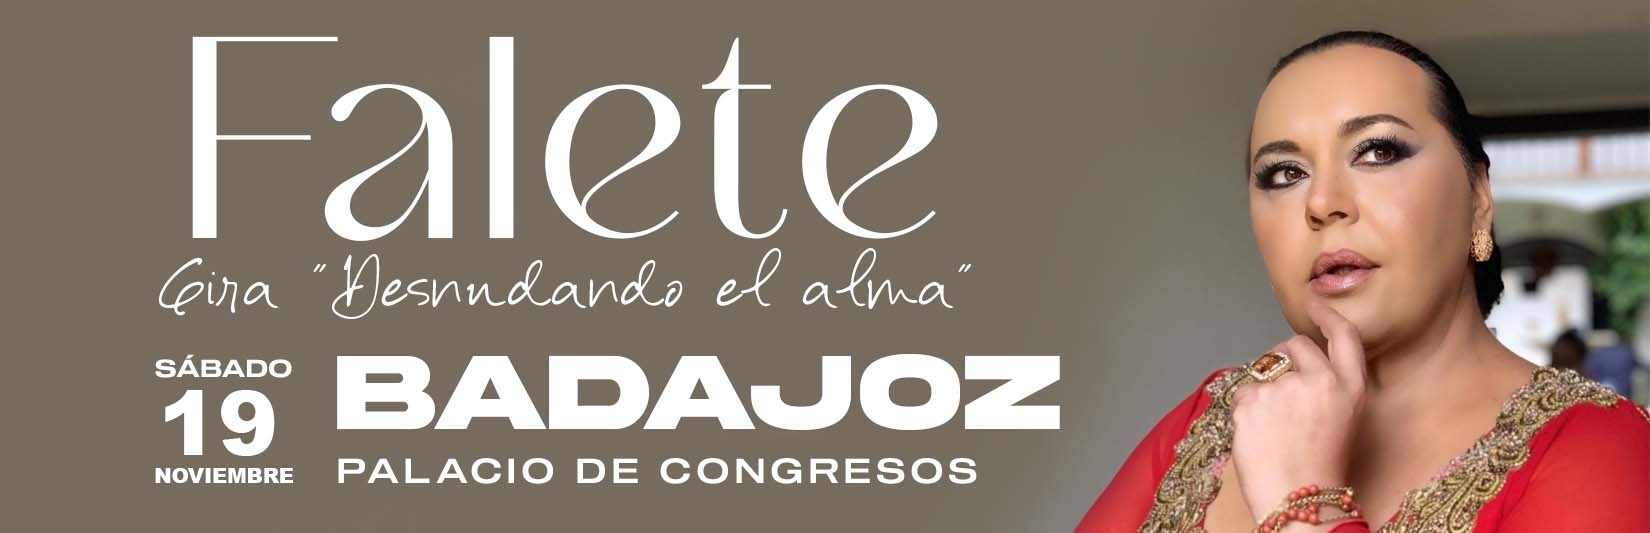 Imagen de Falete - Palacio de Congresos (Badajoz)